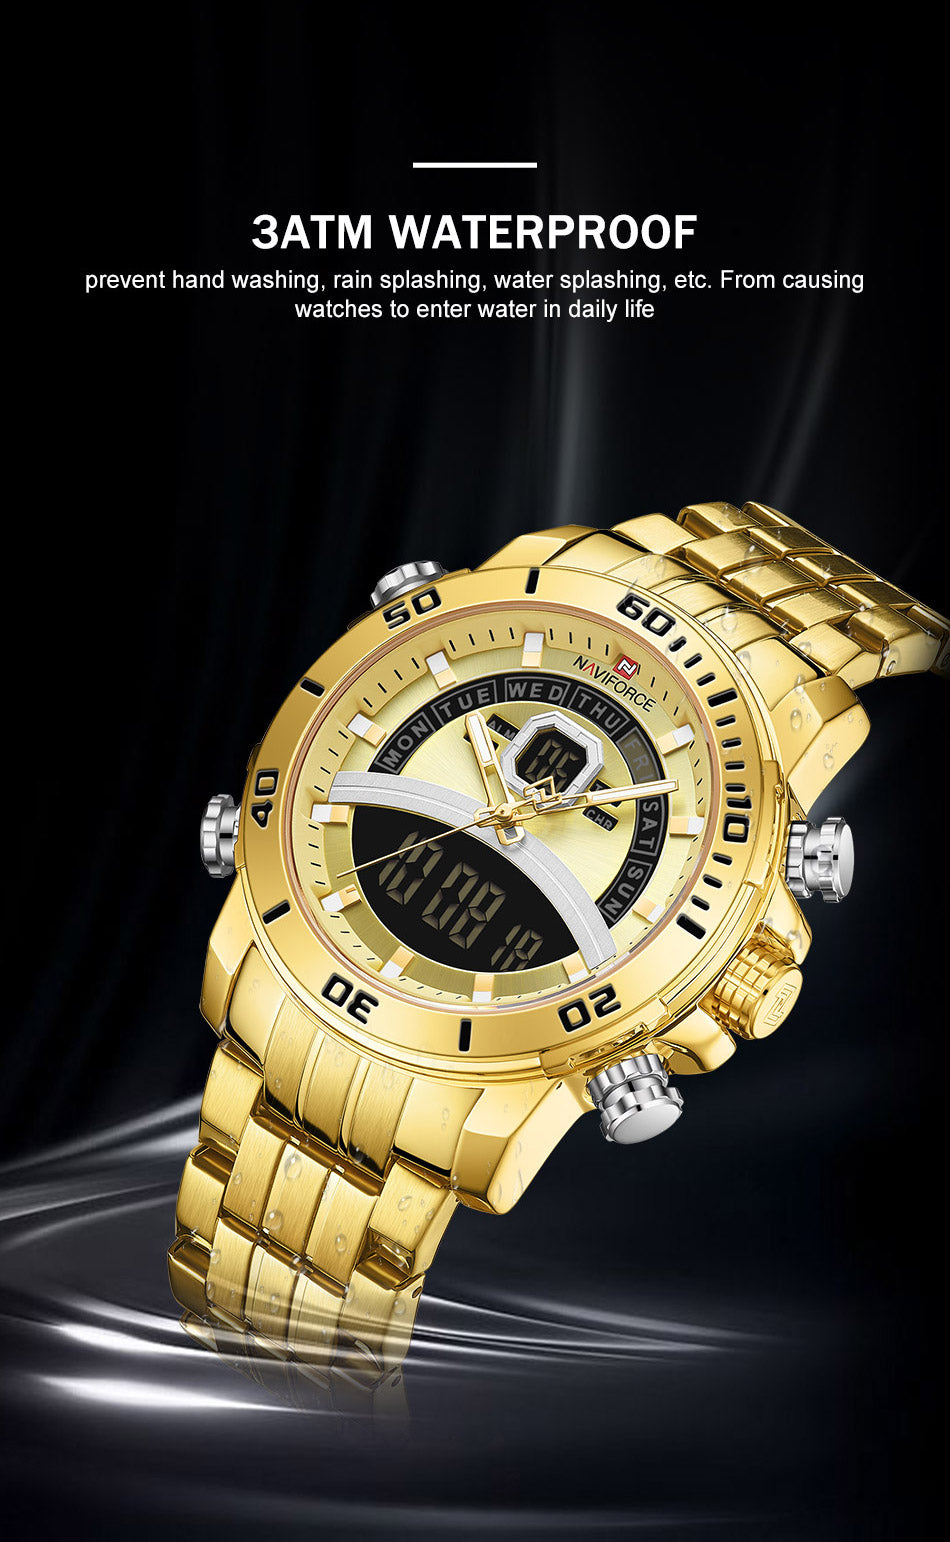 New Naviforce Men Watch Top Luxury Brand Mens Sports Quartz Watches Chronograph Male Clock Stainless Steel Relogio Masculino